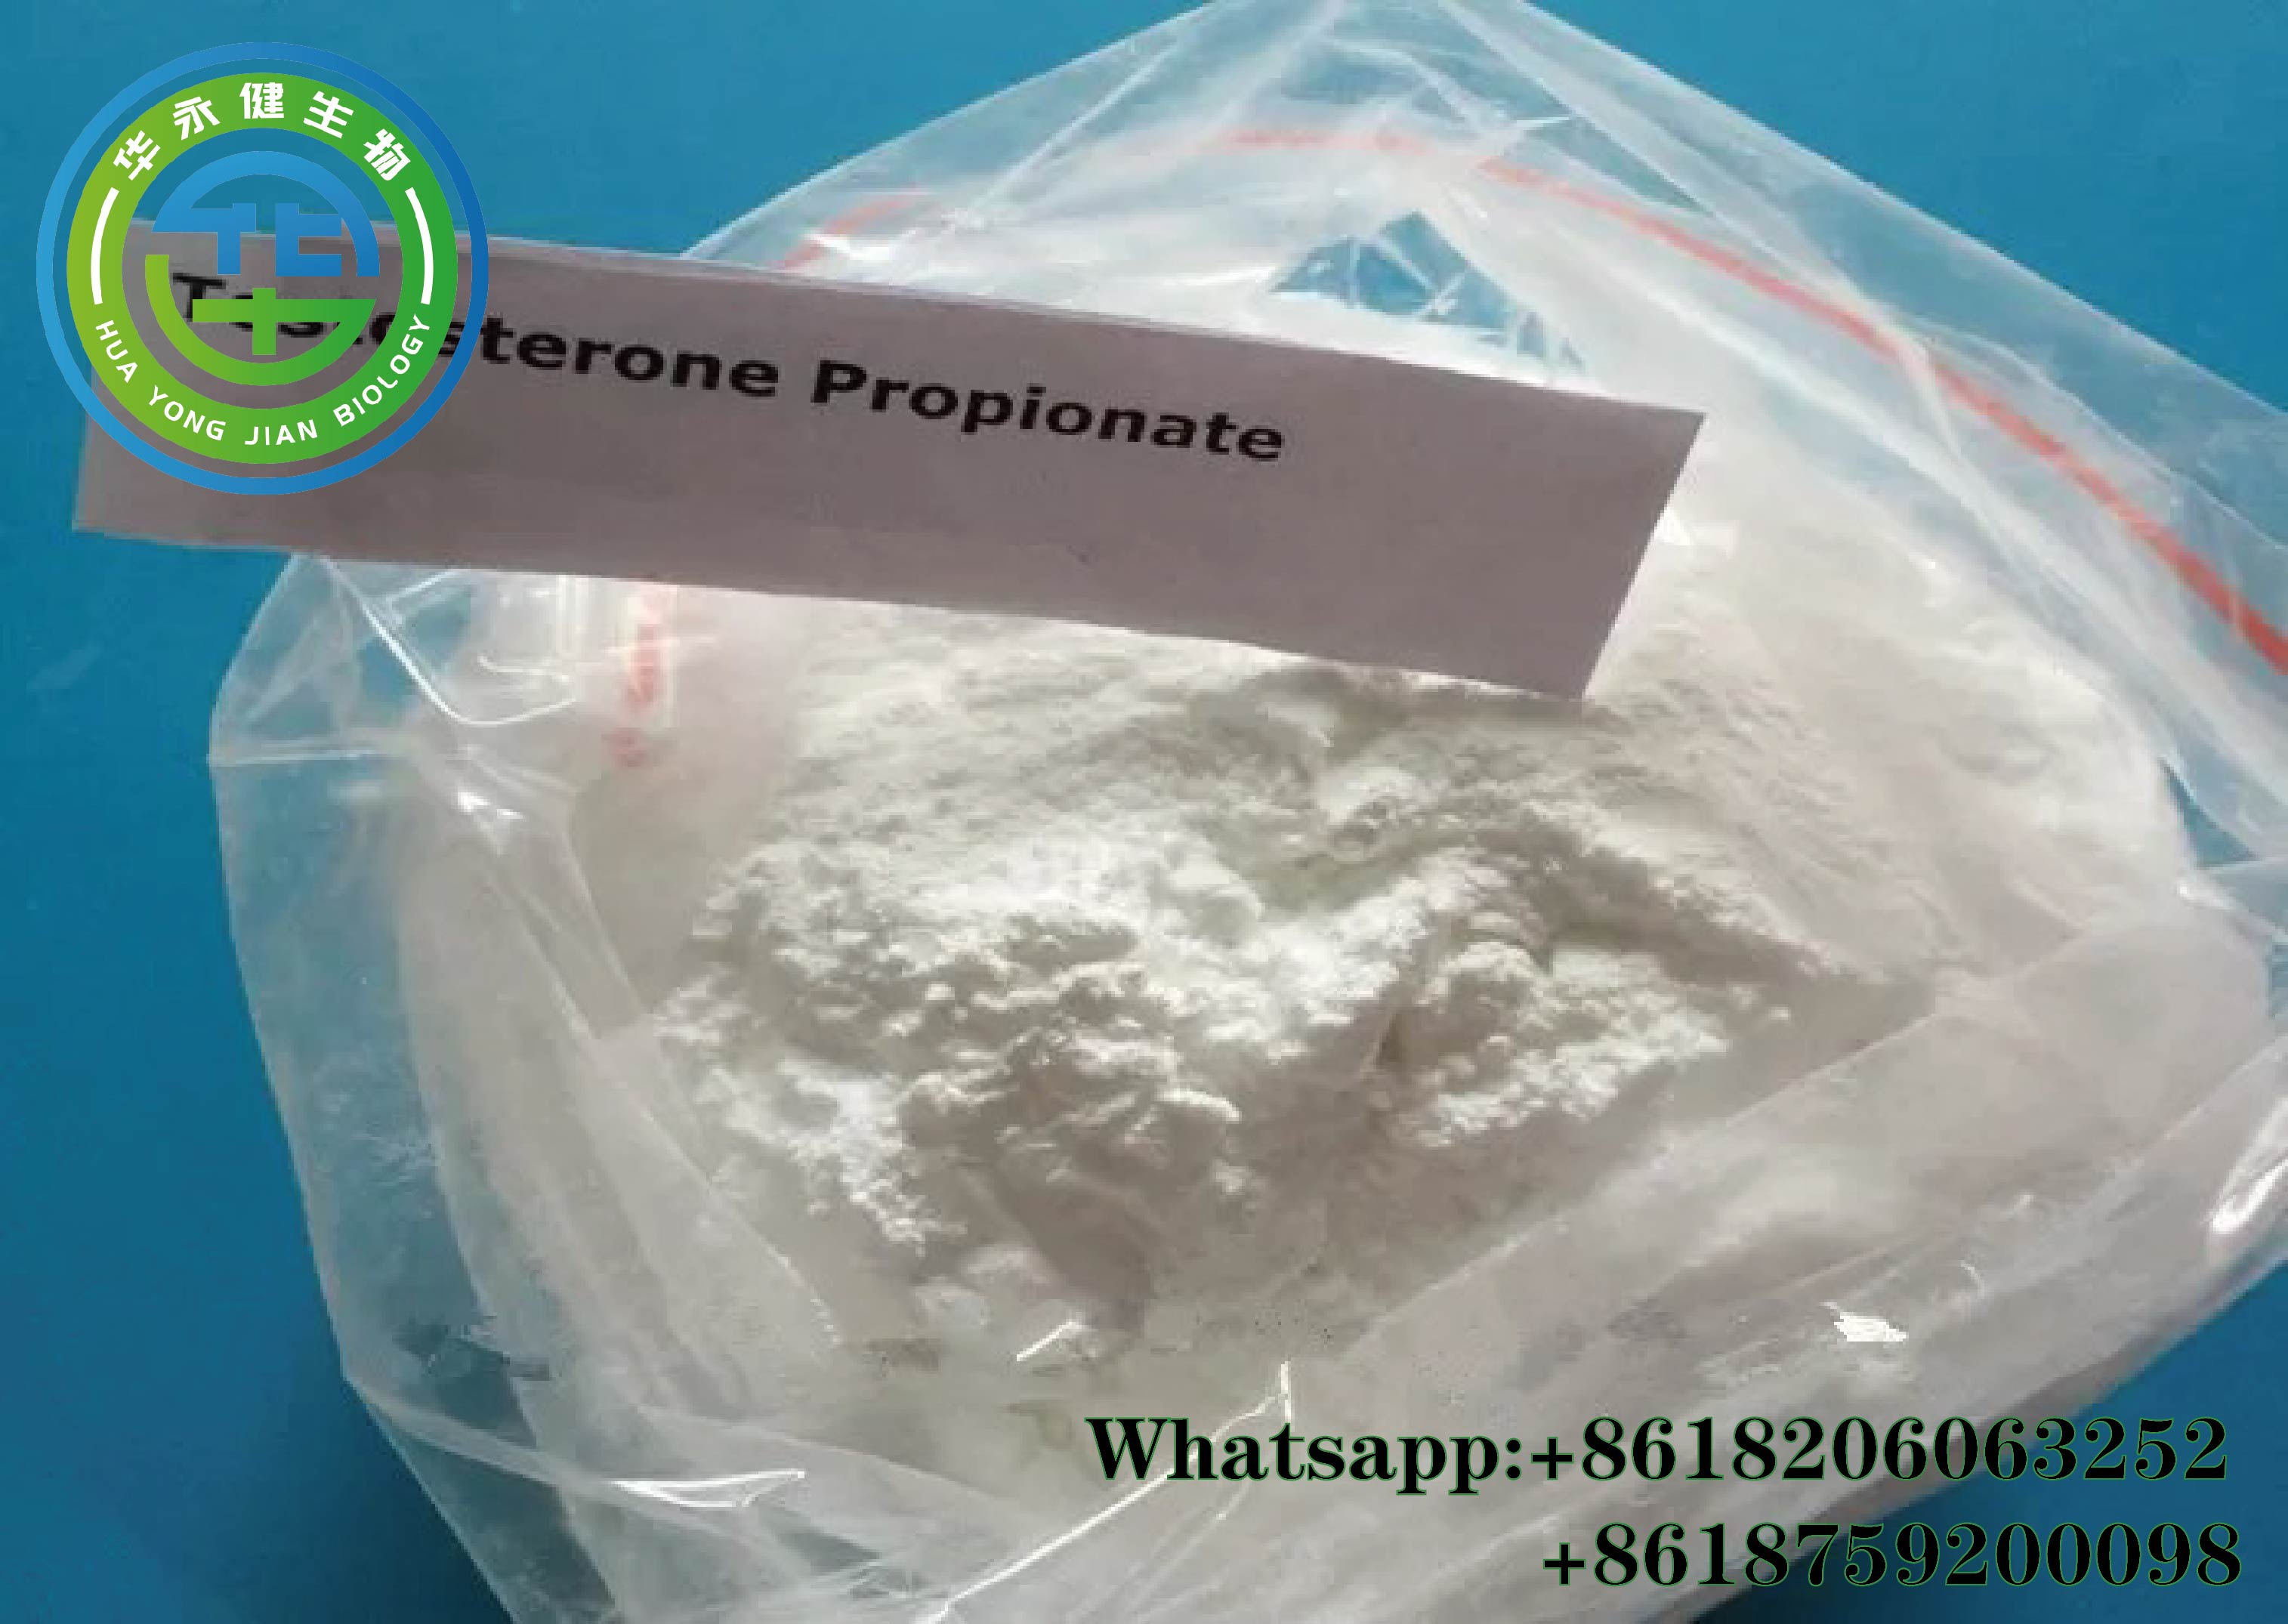 Testosterone Propionate16